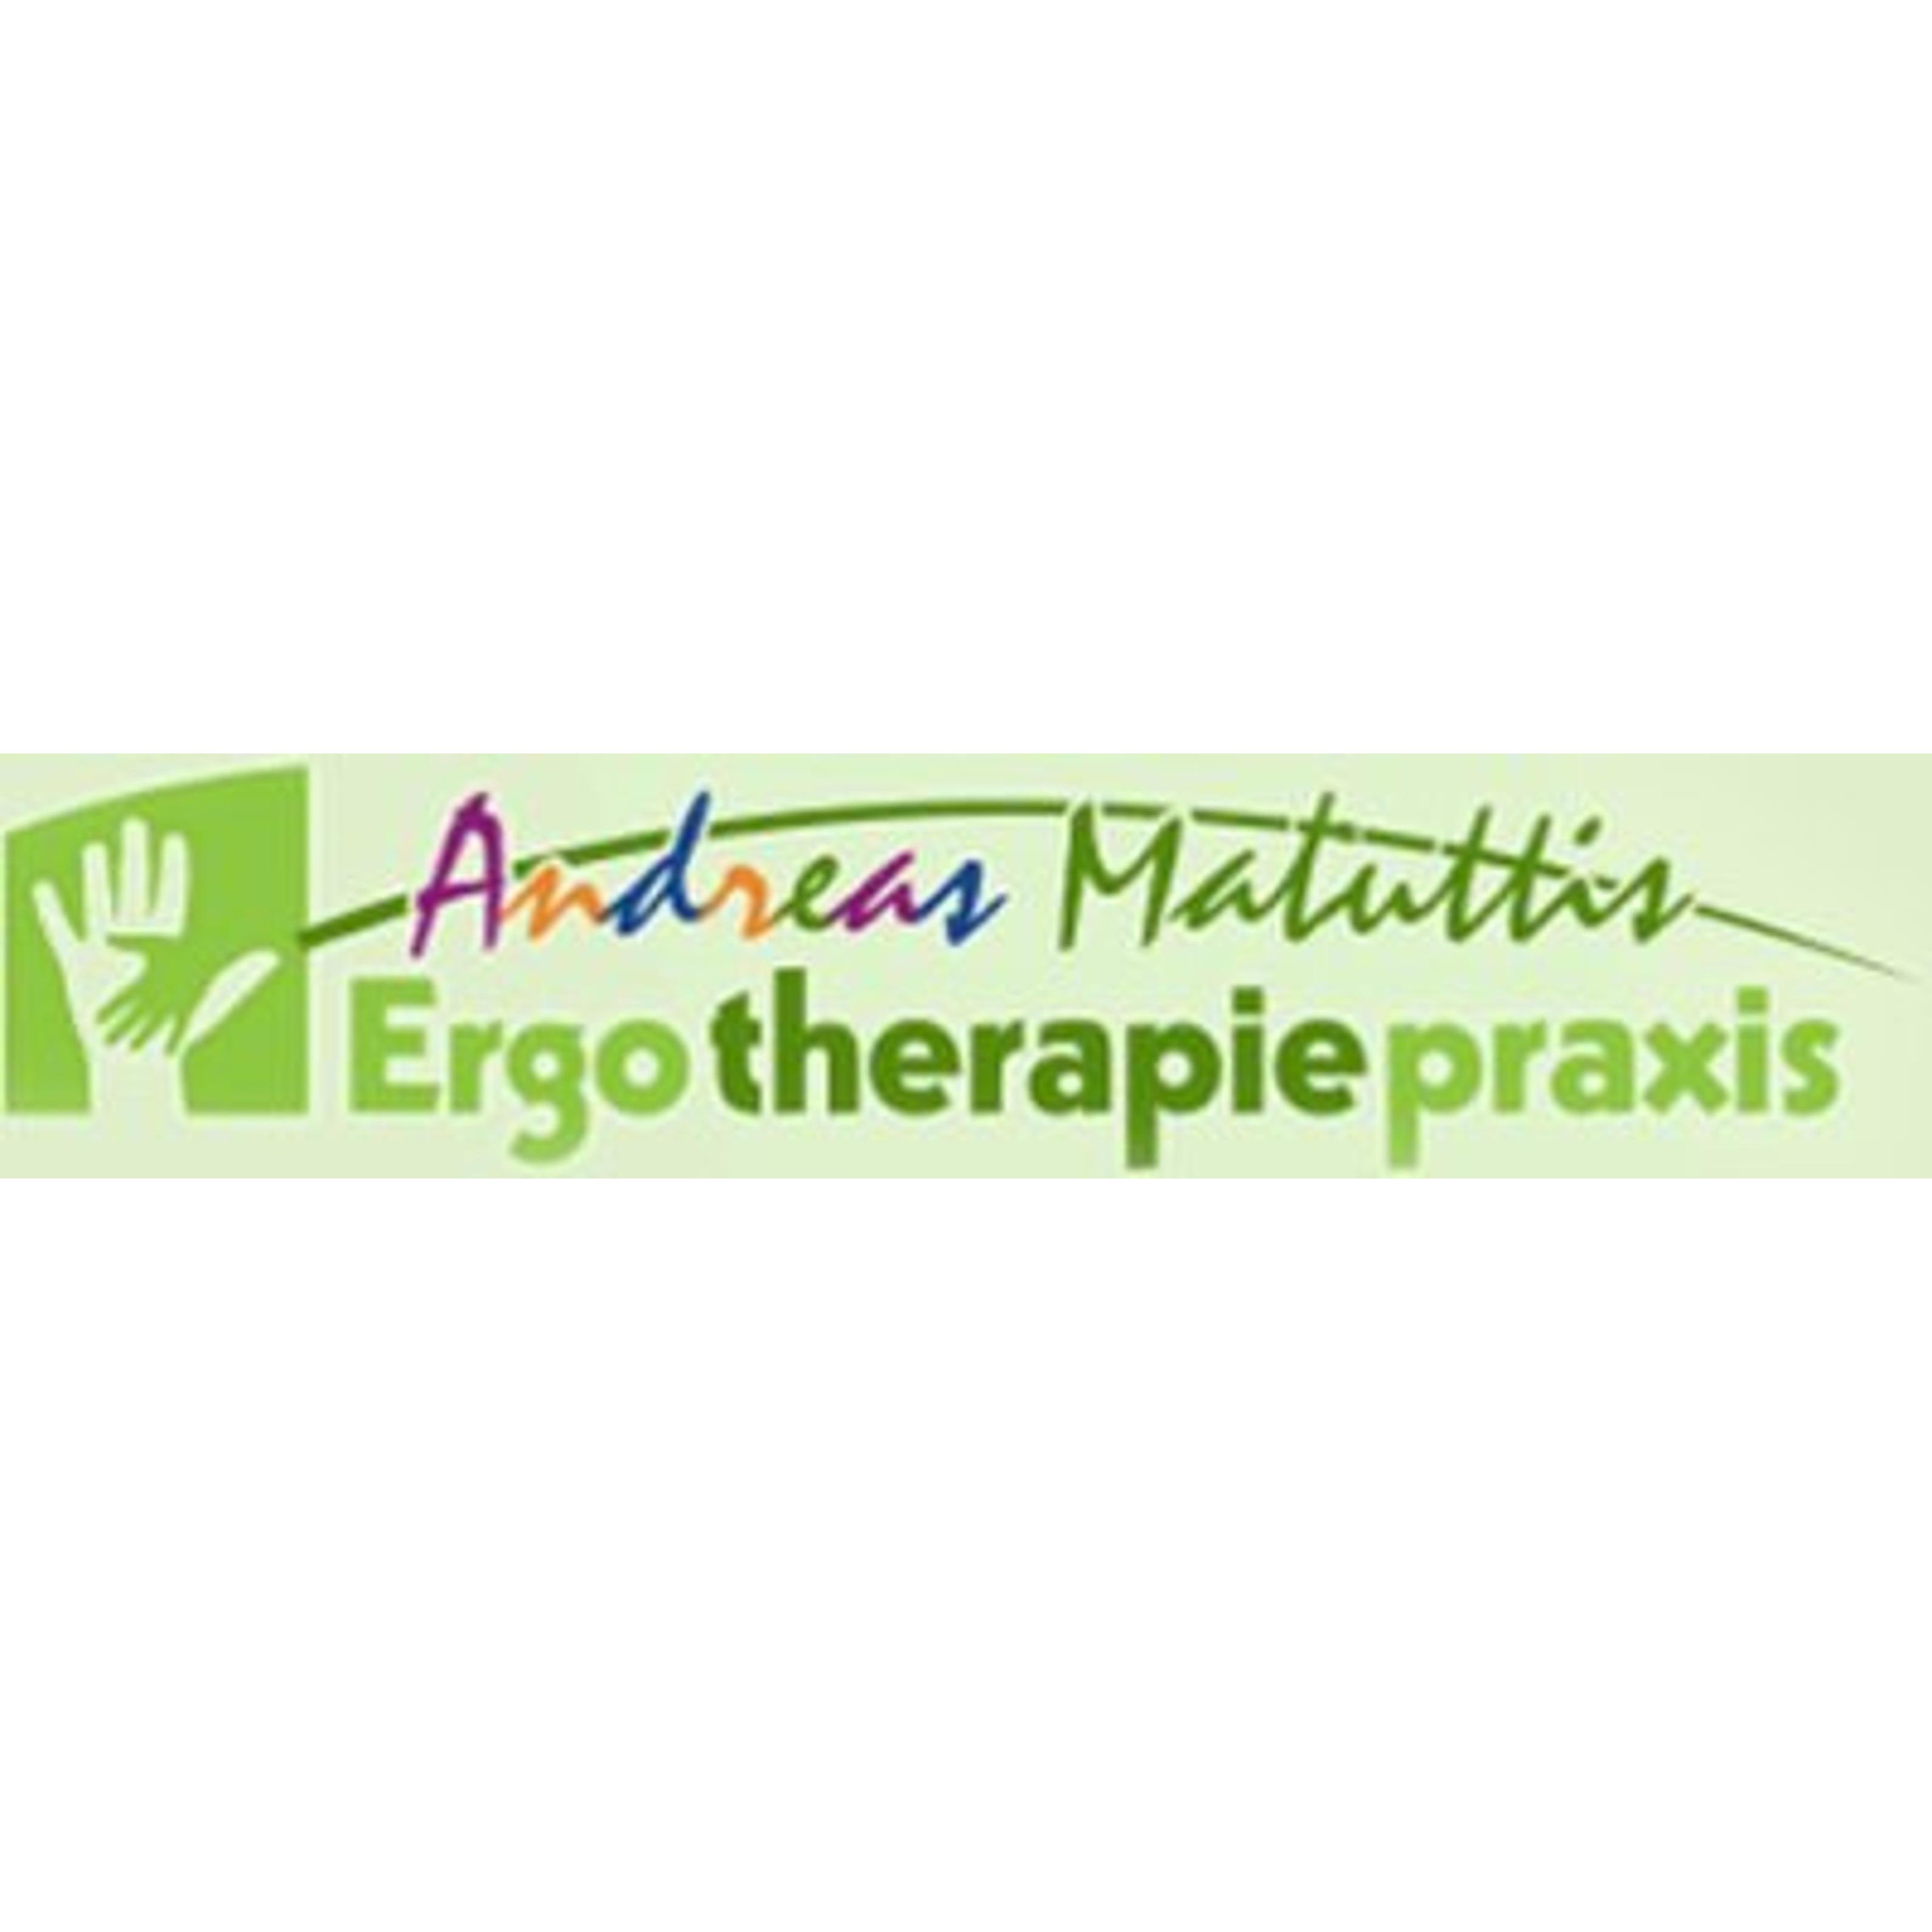 Ergotherapie Praxis Andreas Matuttis in Tuttlingen - Logo